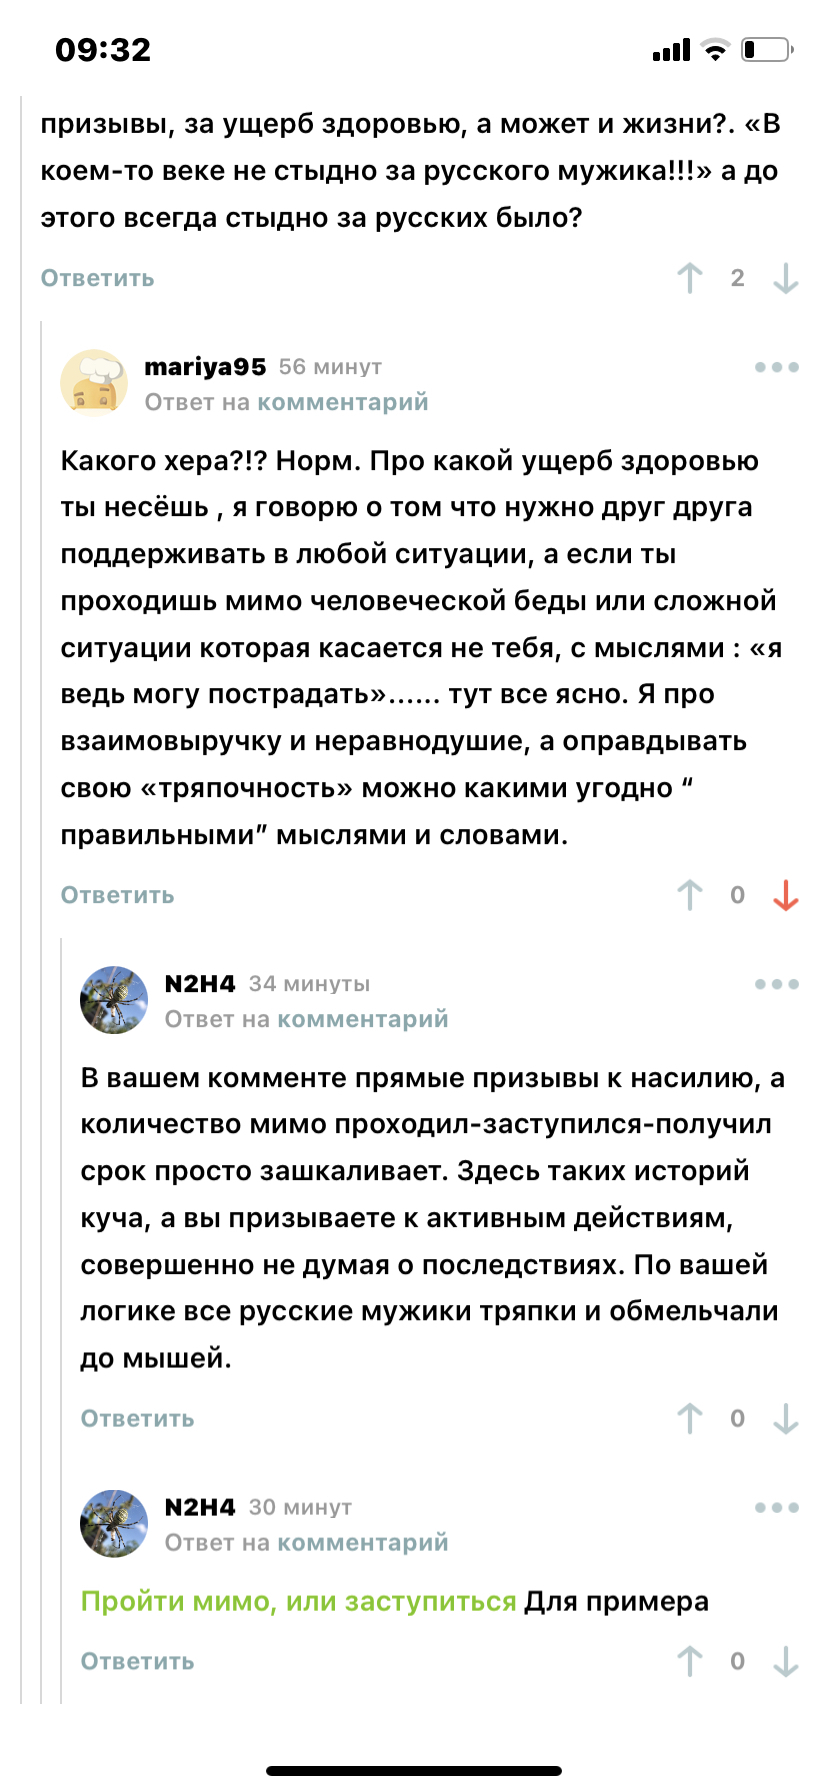 Experienced pikabushka demonstrates disdain for Russians - My, Pick-up headphones, Negative, Longpost, Comments on Peekaboo